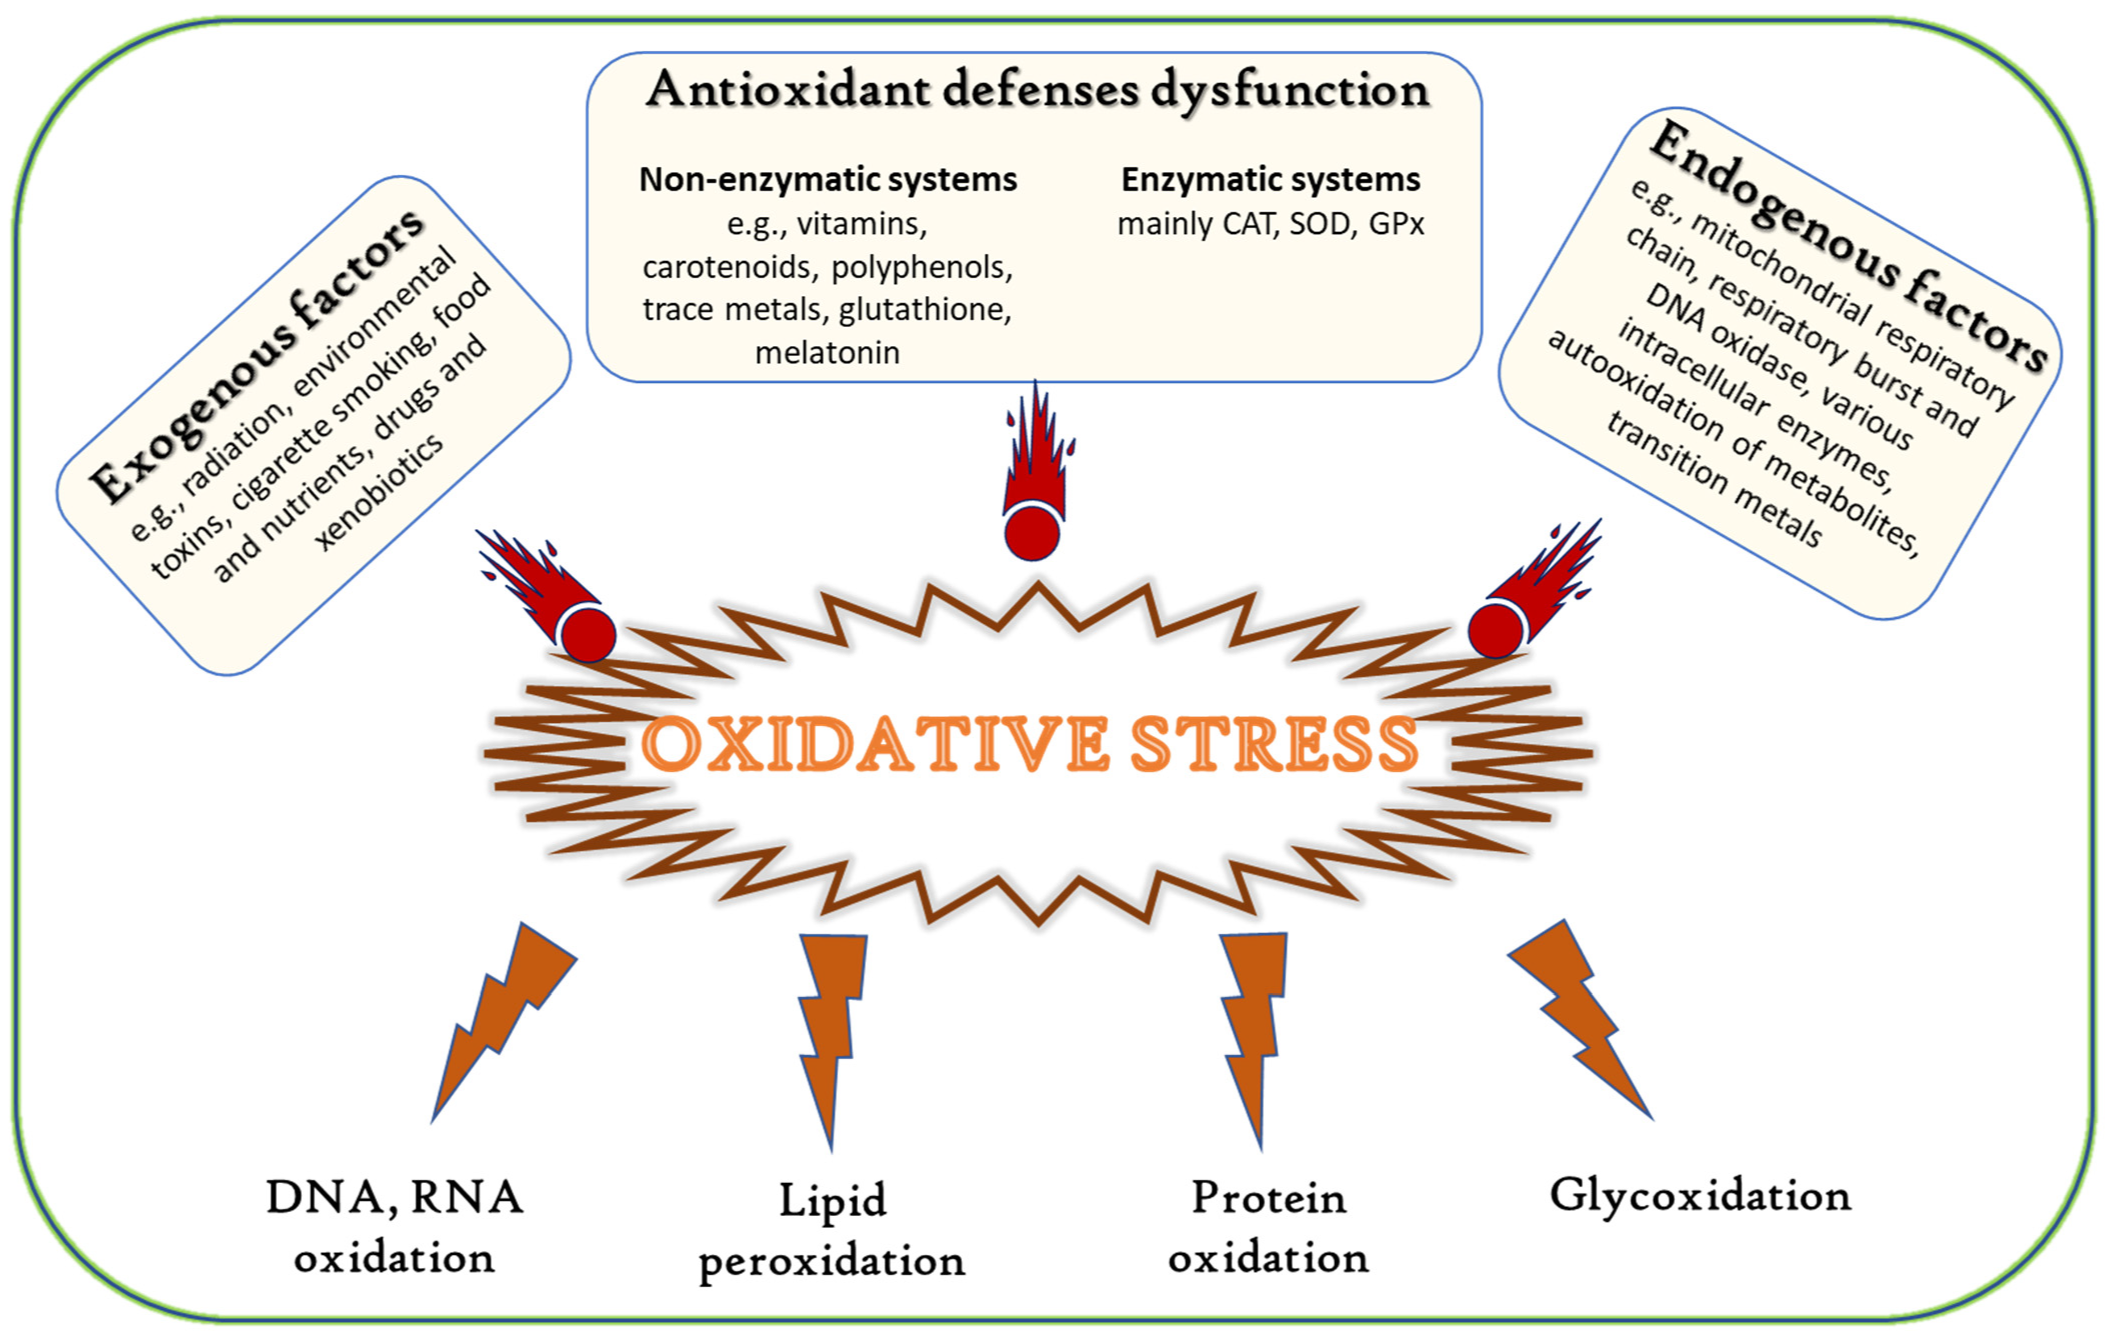 Antioxidant activities